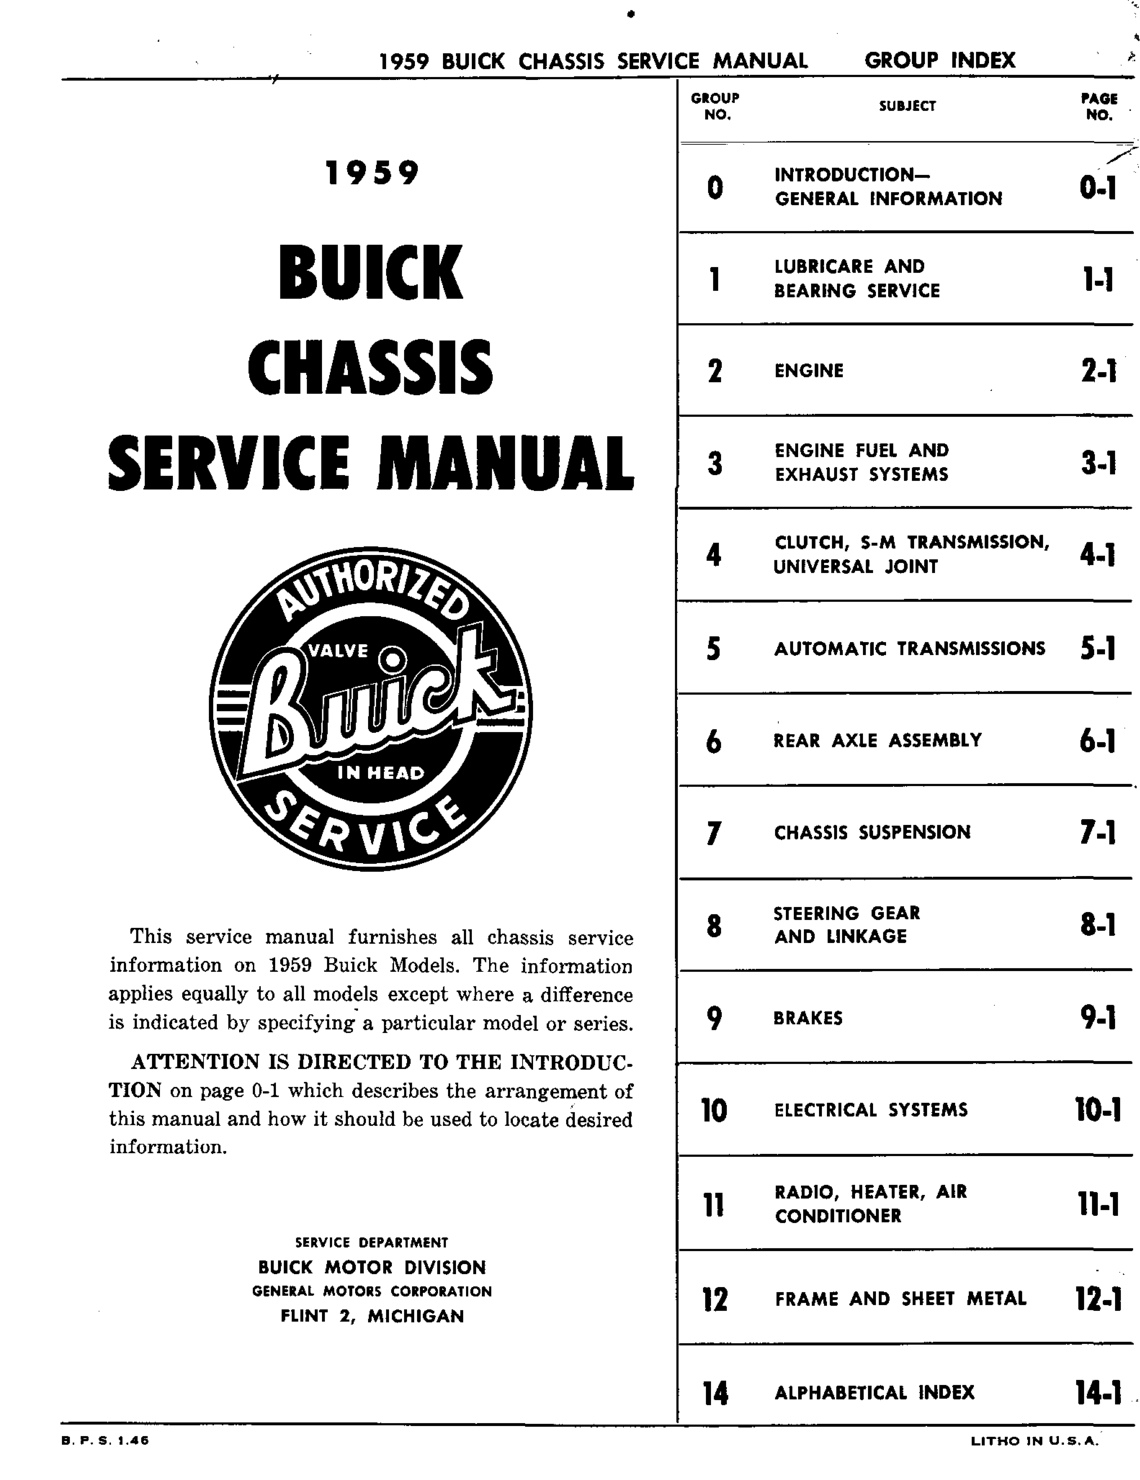 n_01 1959 Buick Shop Manual - Gen Information-001-001.jpg